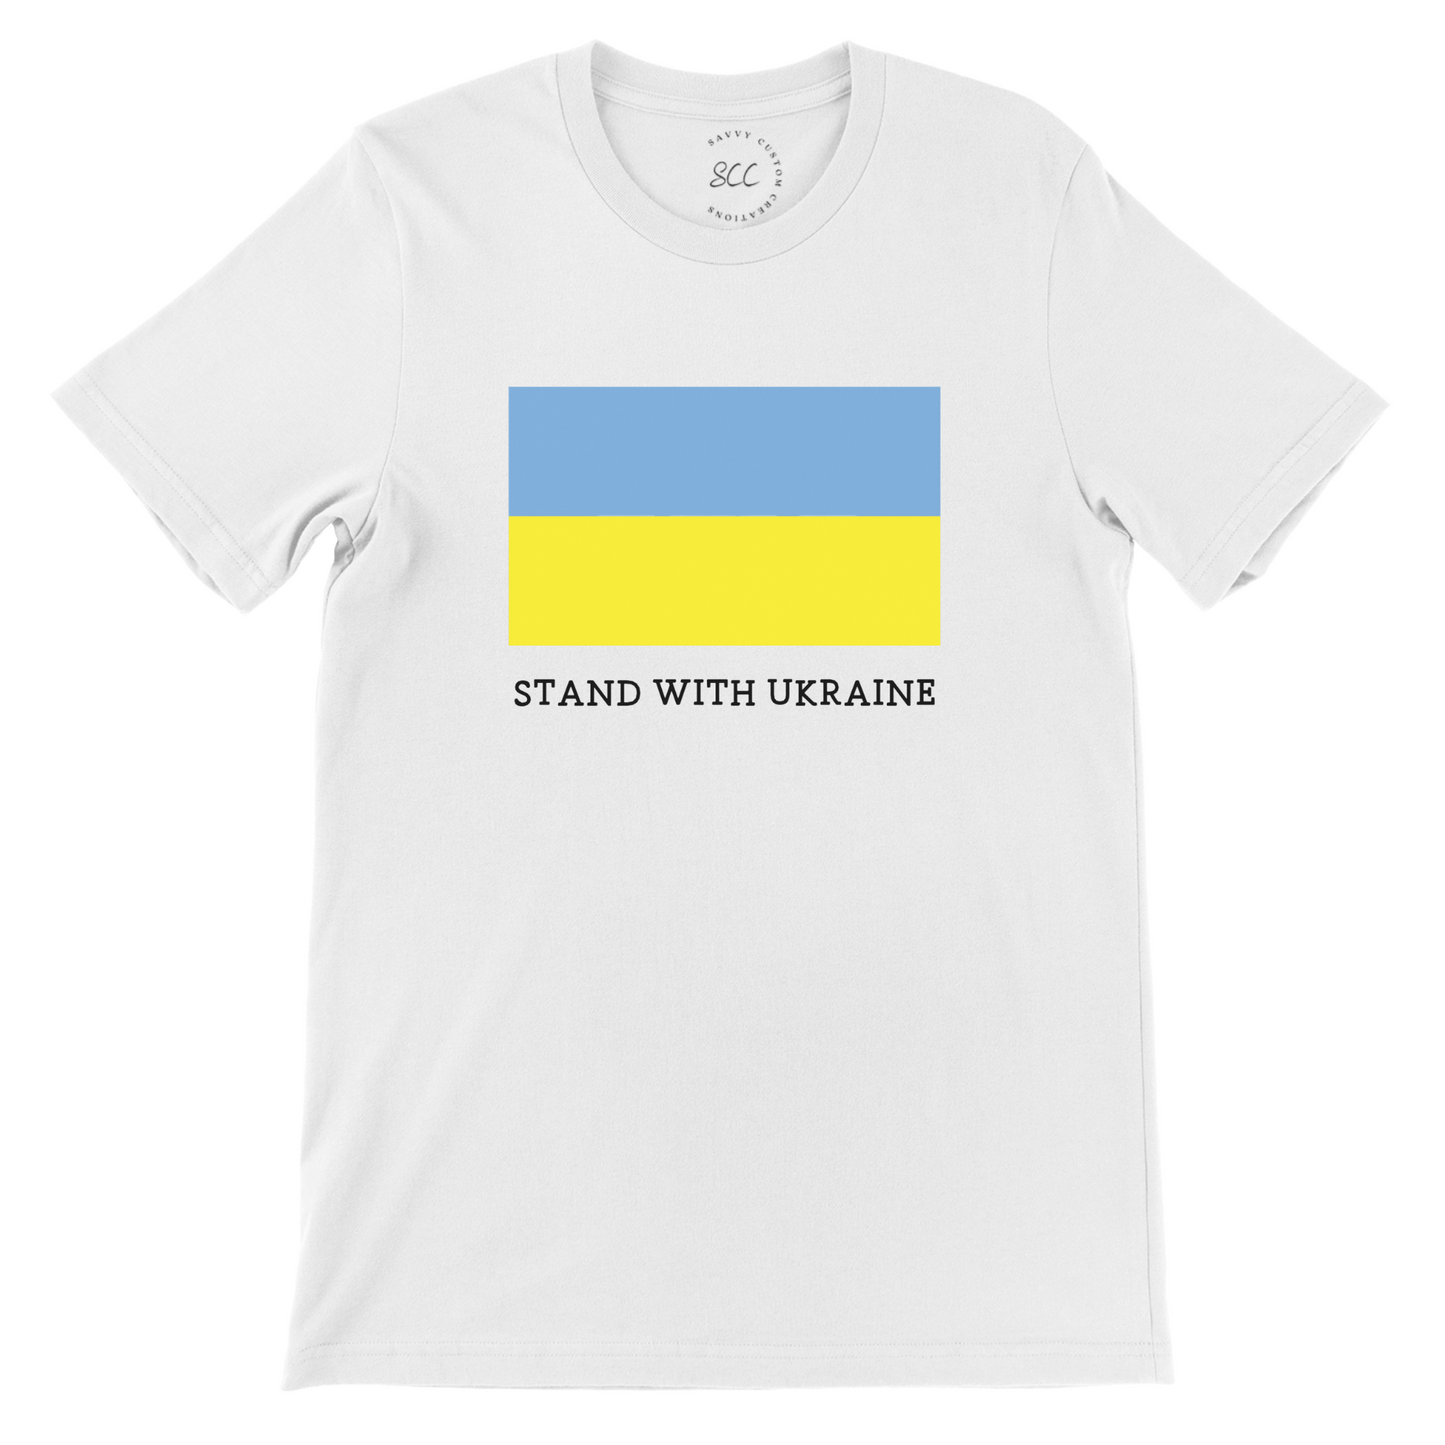 STAND WITH UKRAINE - Unisex Crewneck T-Shirt